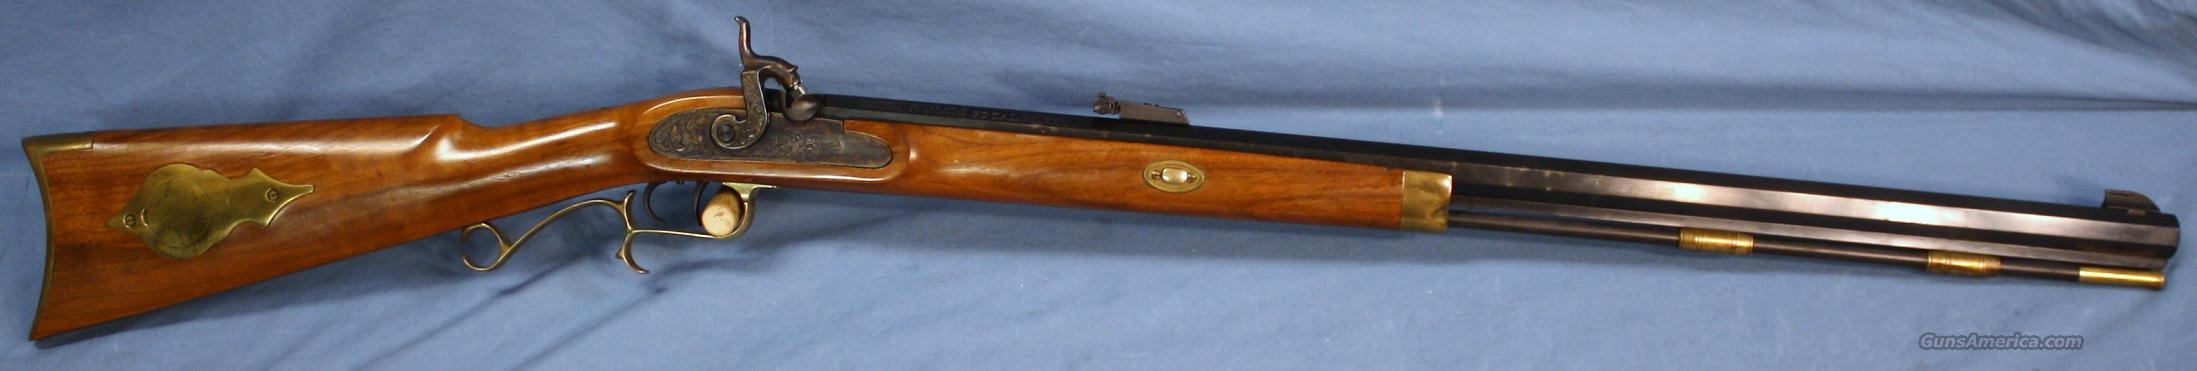 Brass Scope For Hawken Rifle Professionalfasr